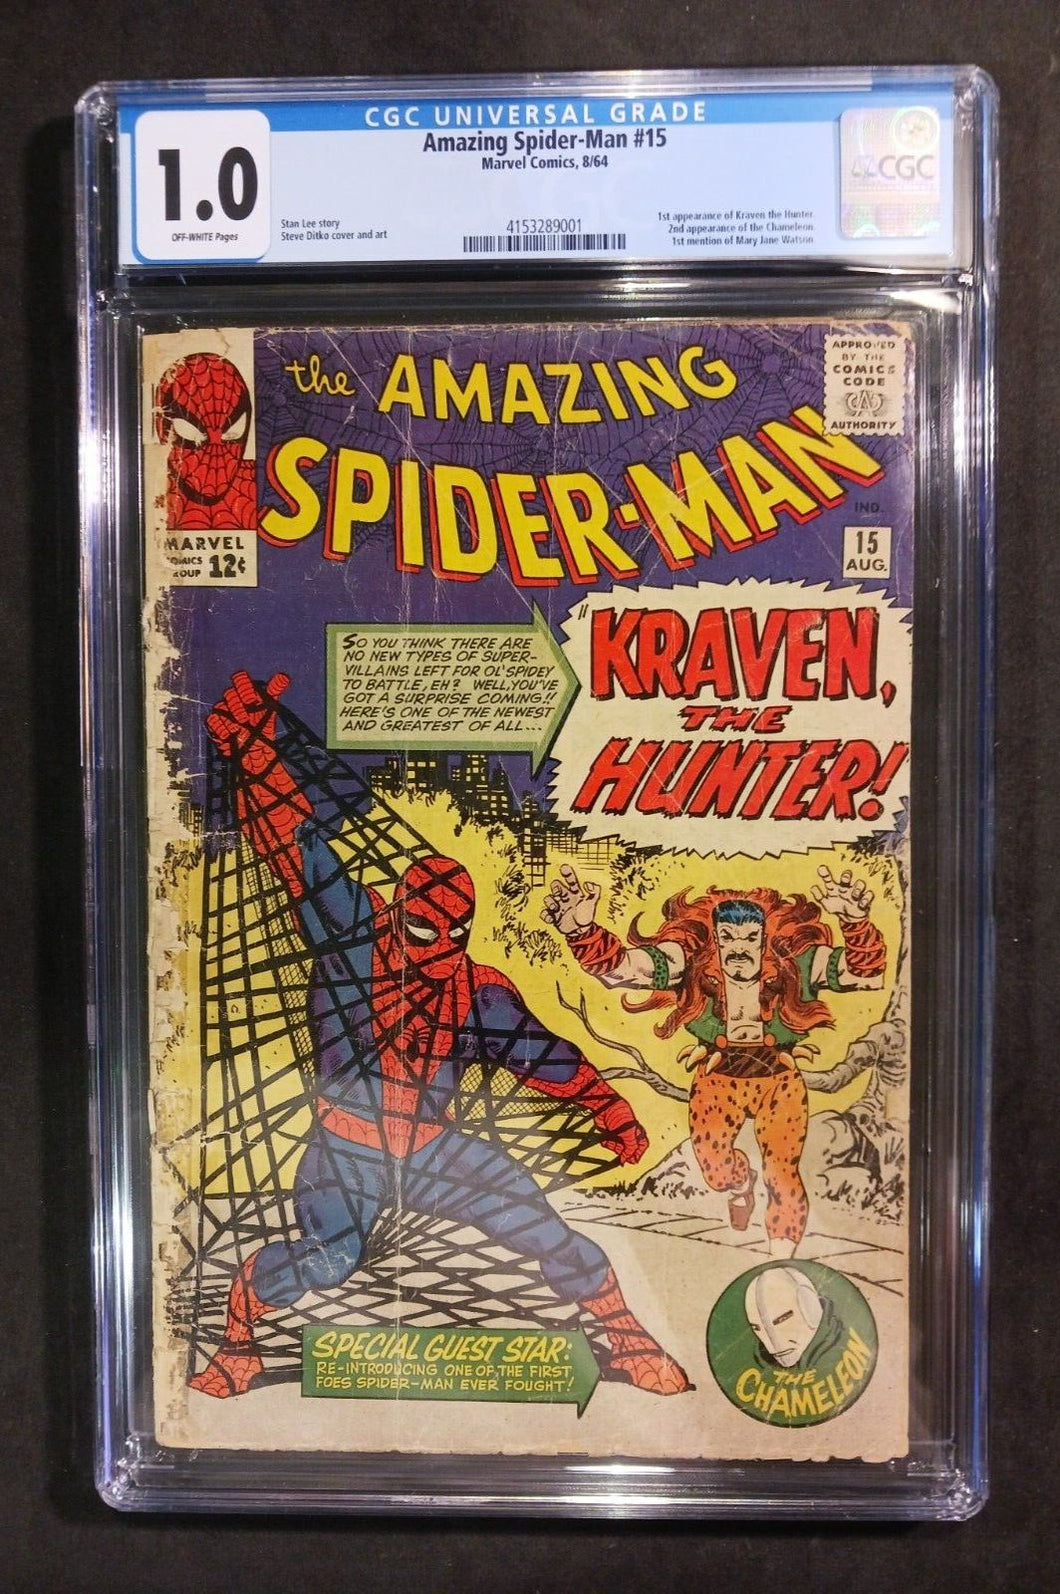 Amazing Spider-Man #15 Marvel Comics 1964 CGC 1.0 Off-White Serial #4153289001